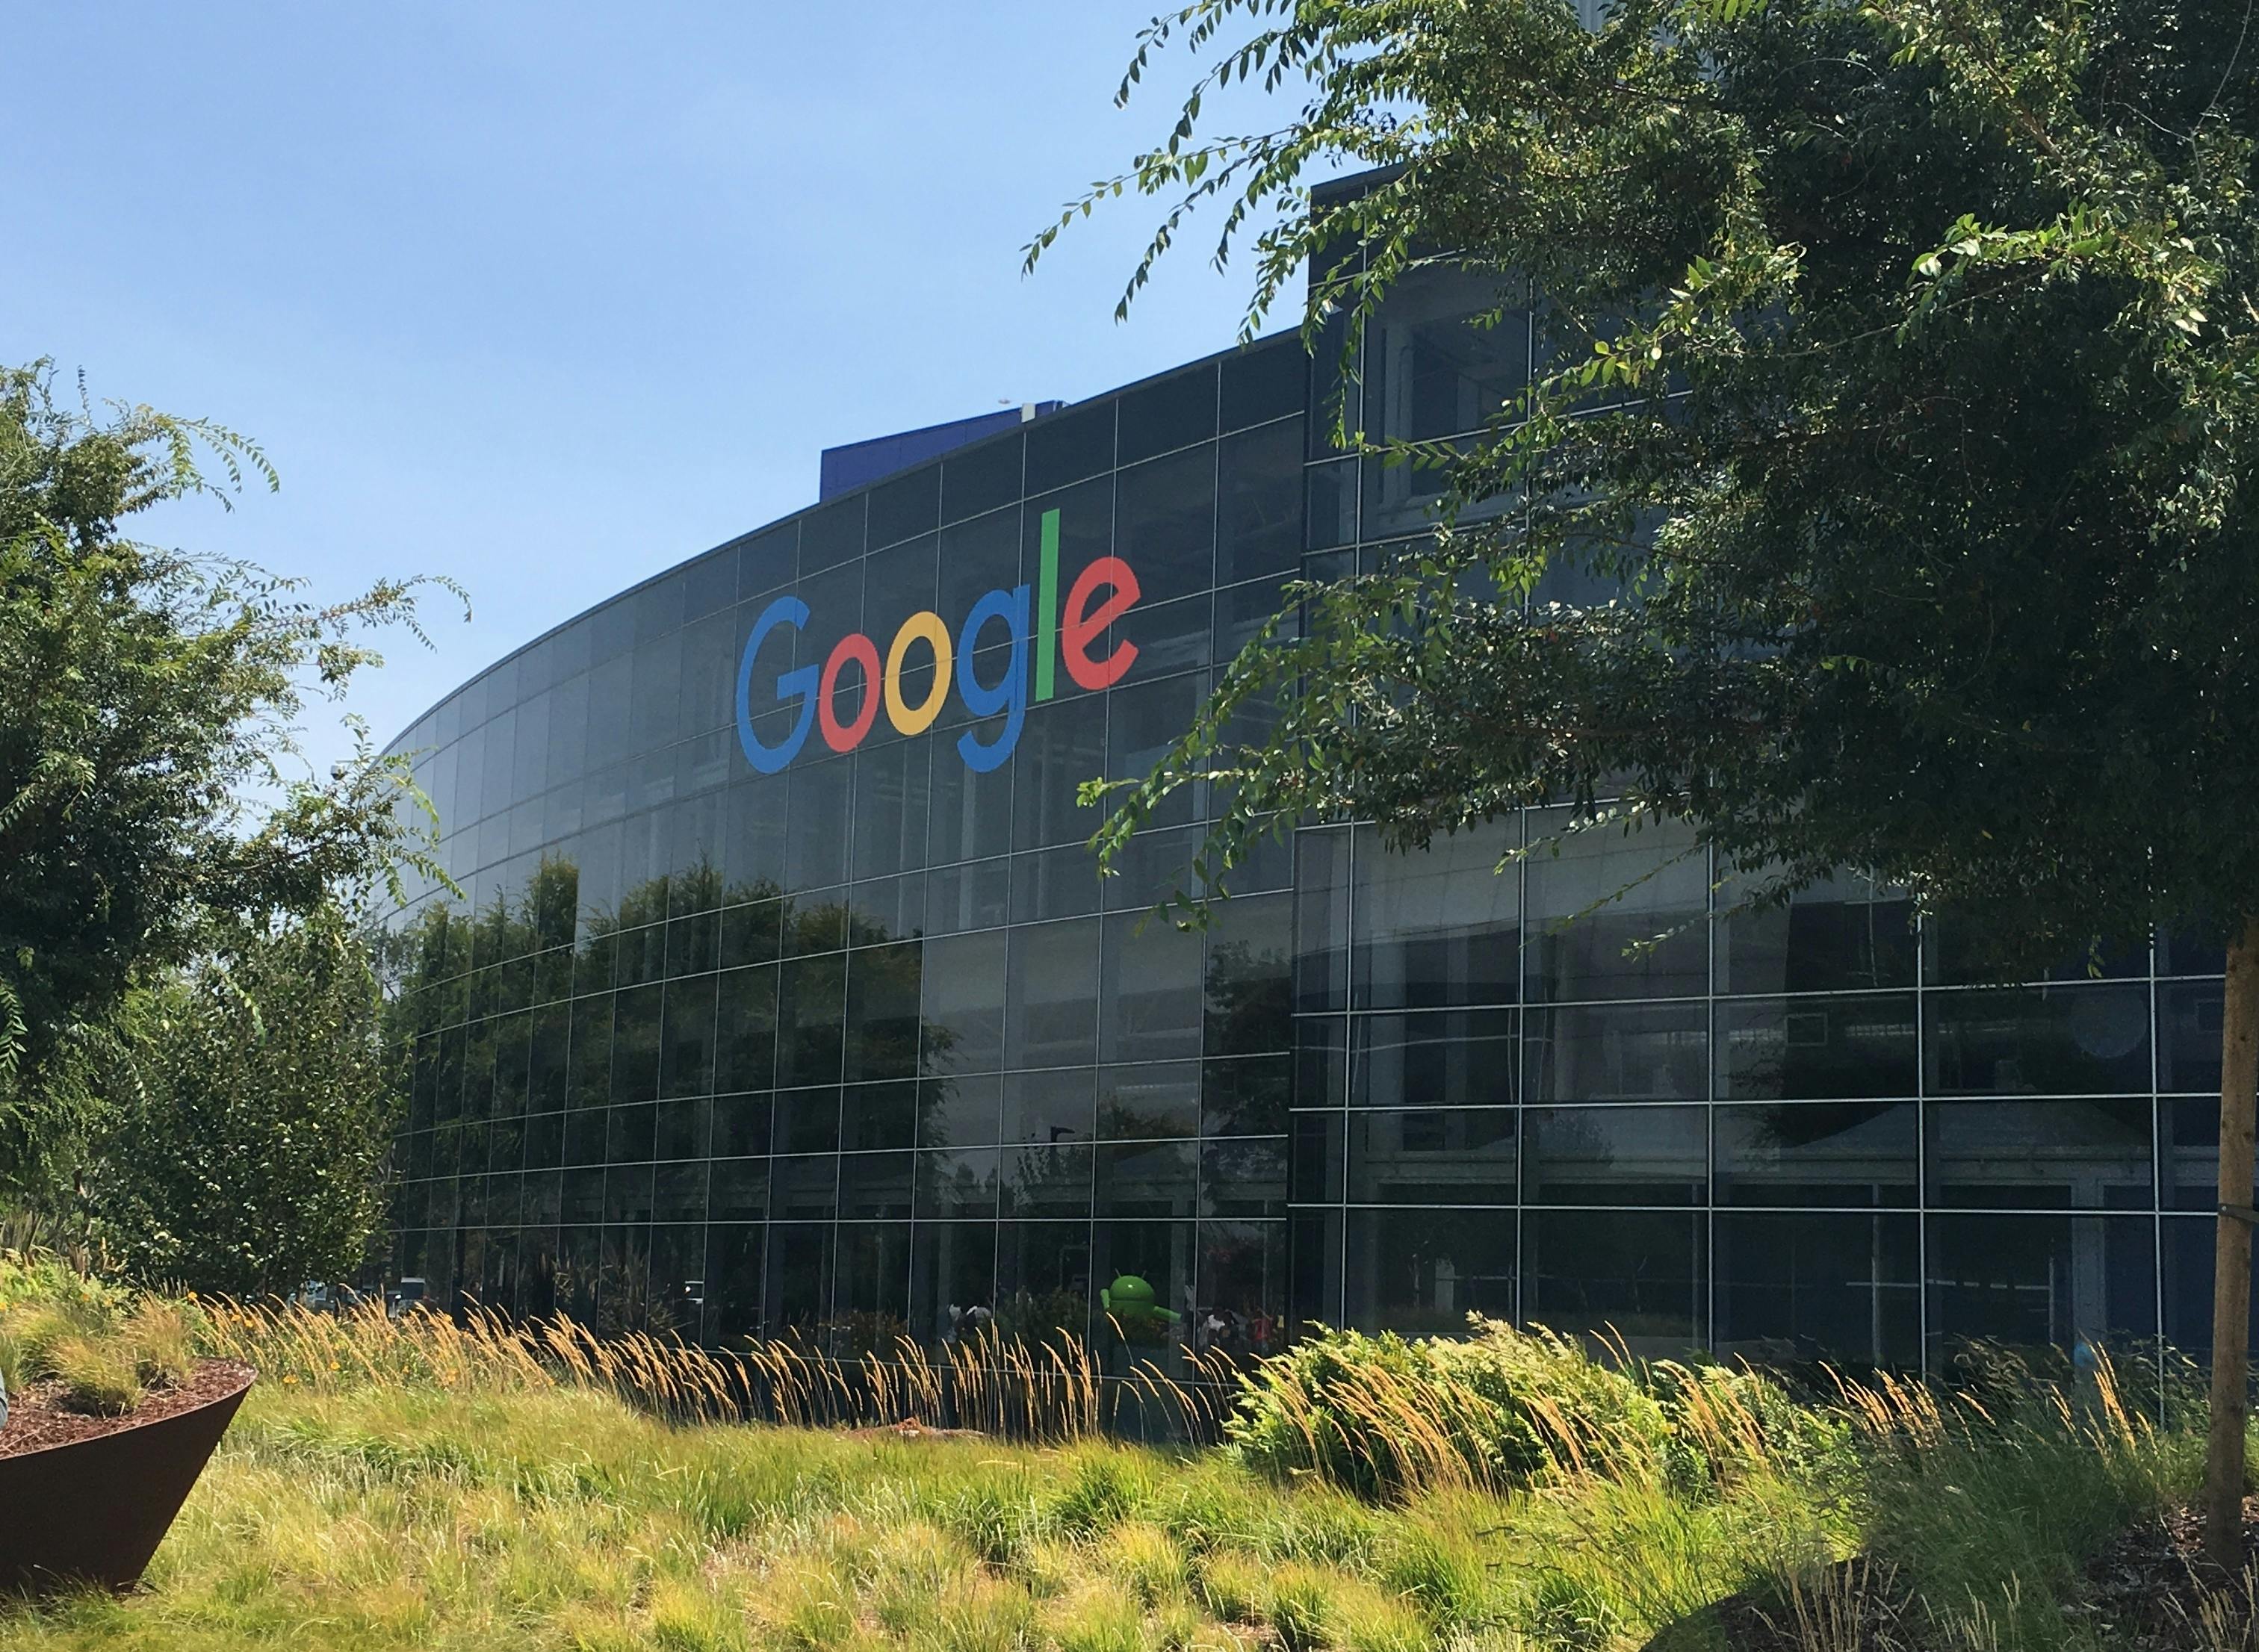 Google headquarters in Mountain View, CA (Wikimedia Commons)